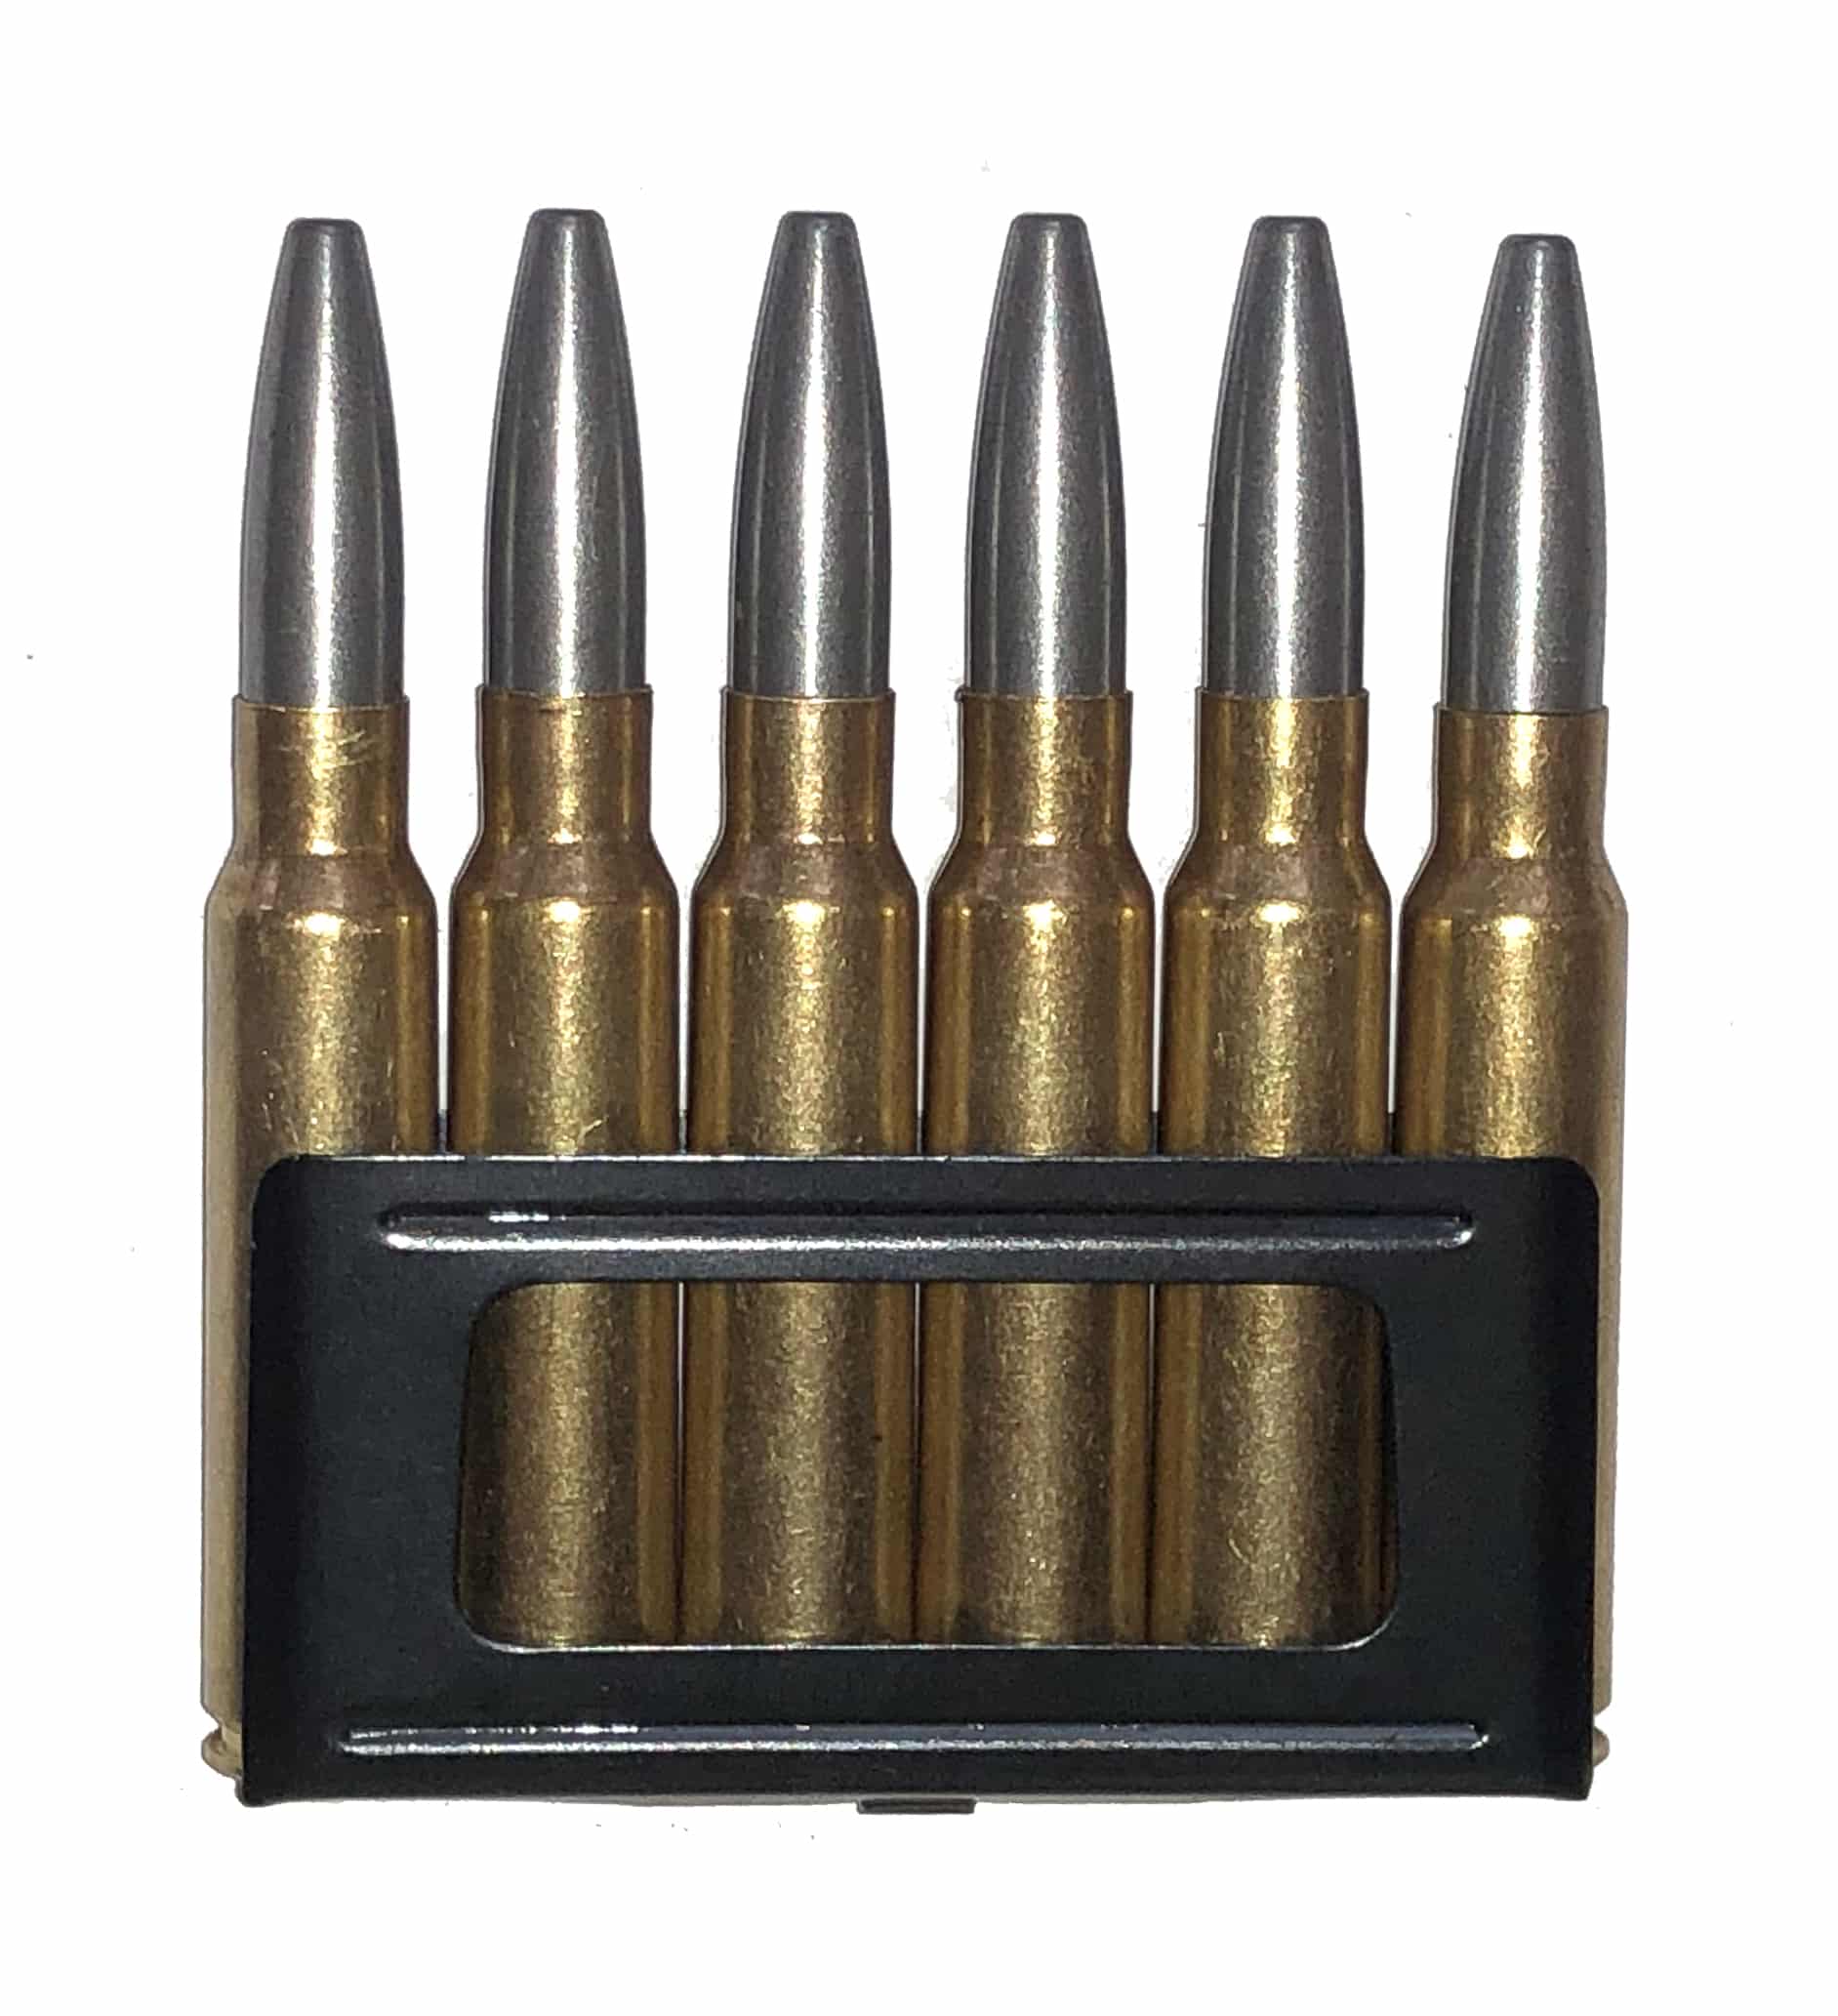 7.35x51 Carcano Snap Caps in Enbloc Clip Dummy Rounds Fake Bullets J&M Spec INERT